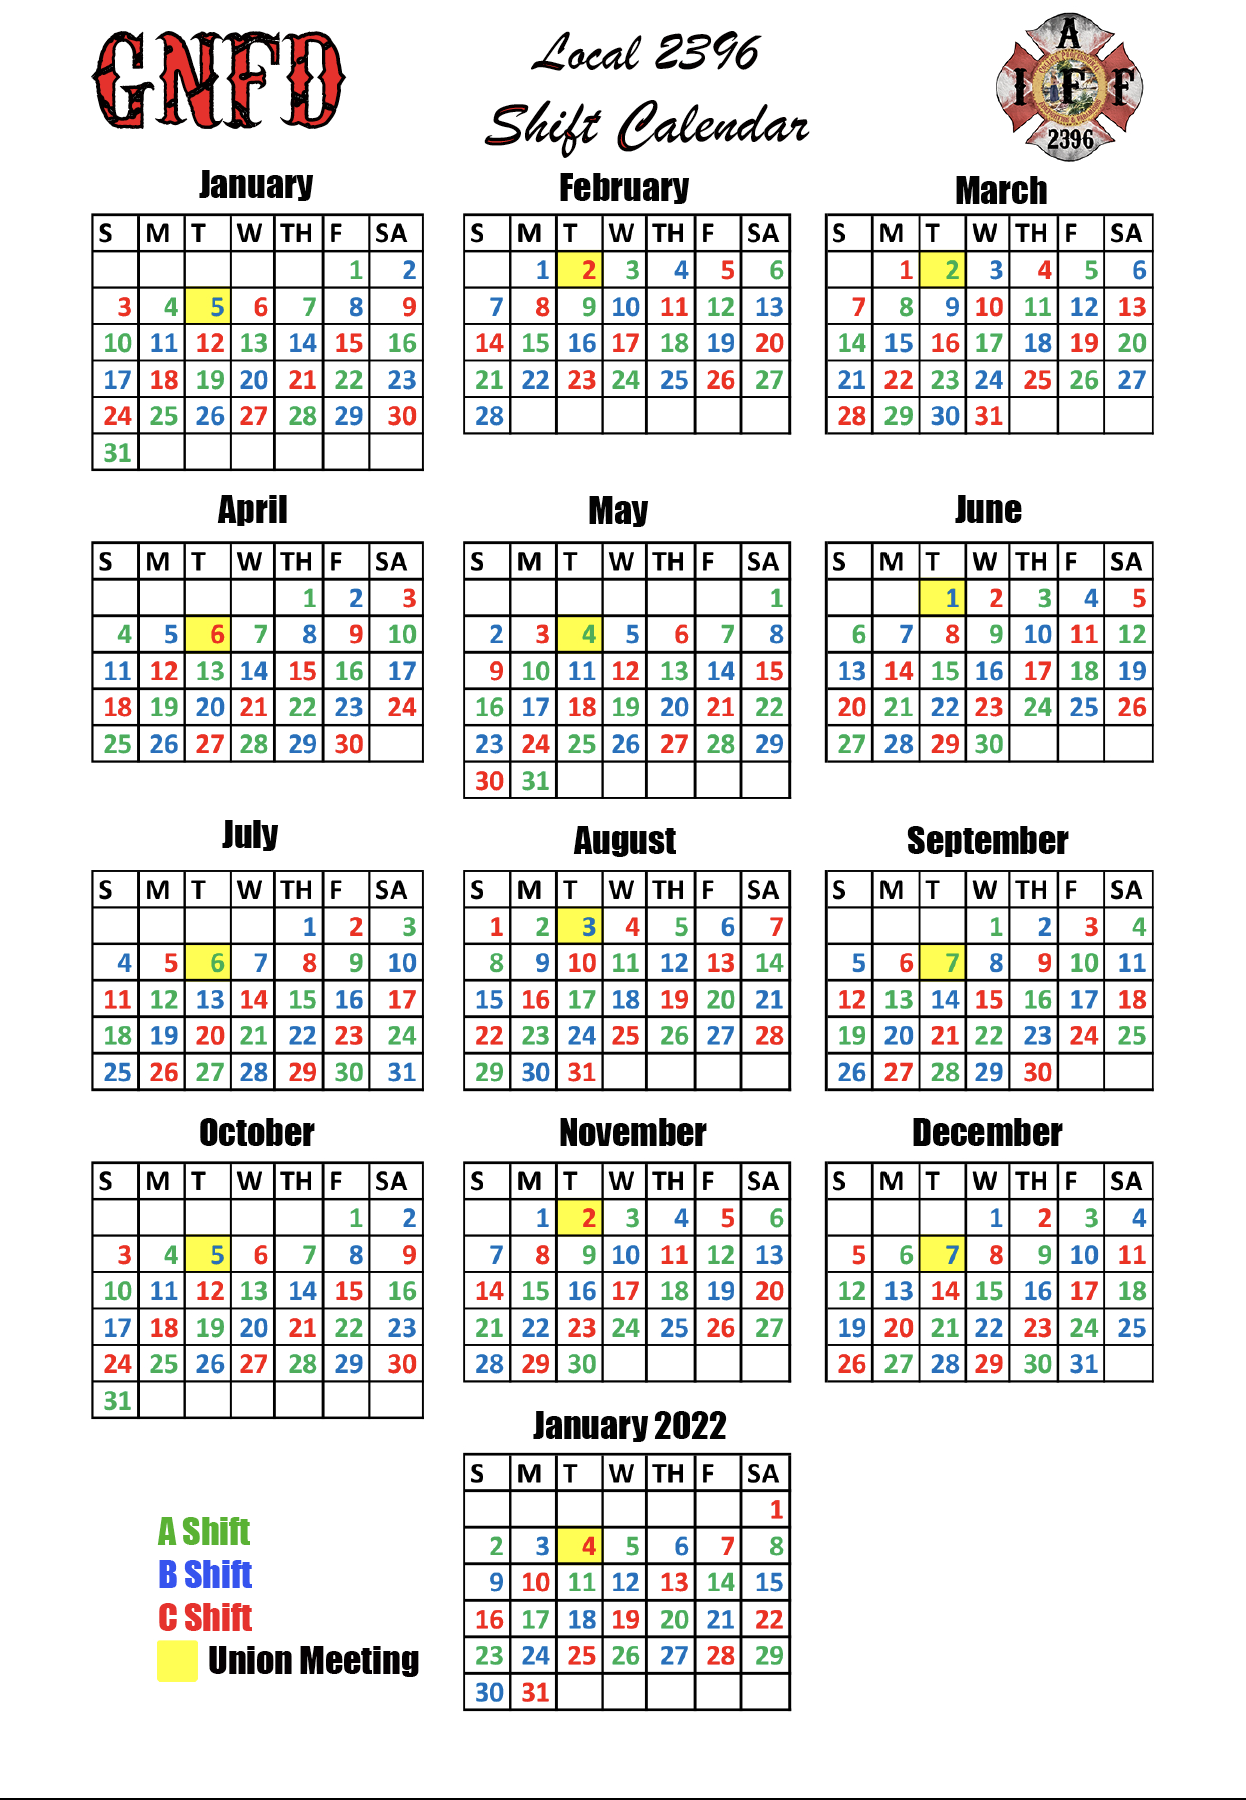 Shift Calendar local